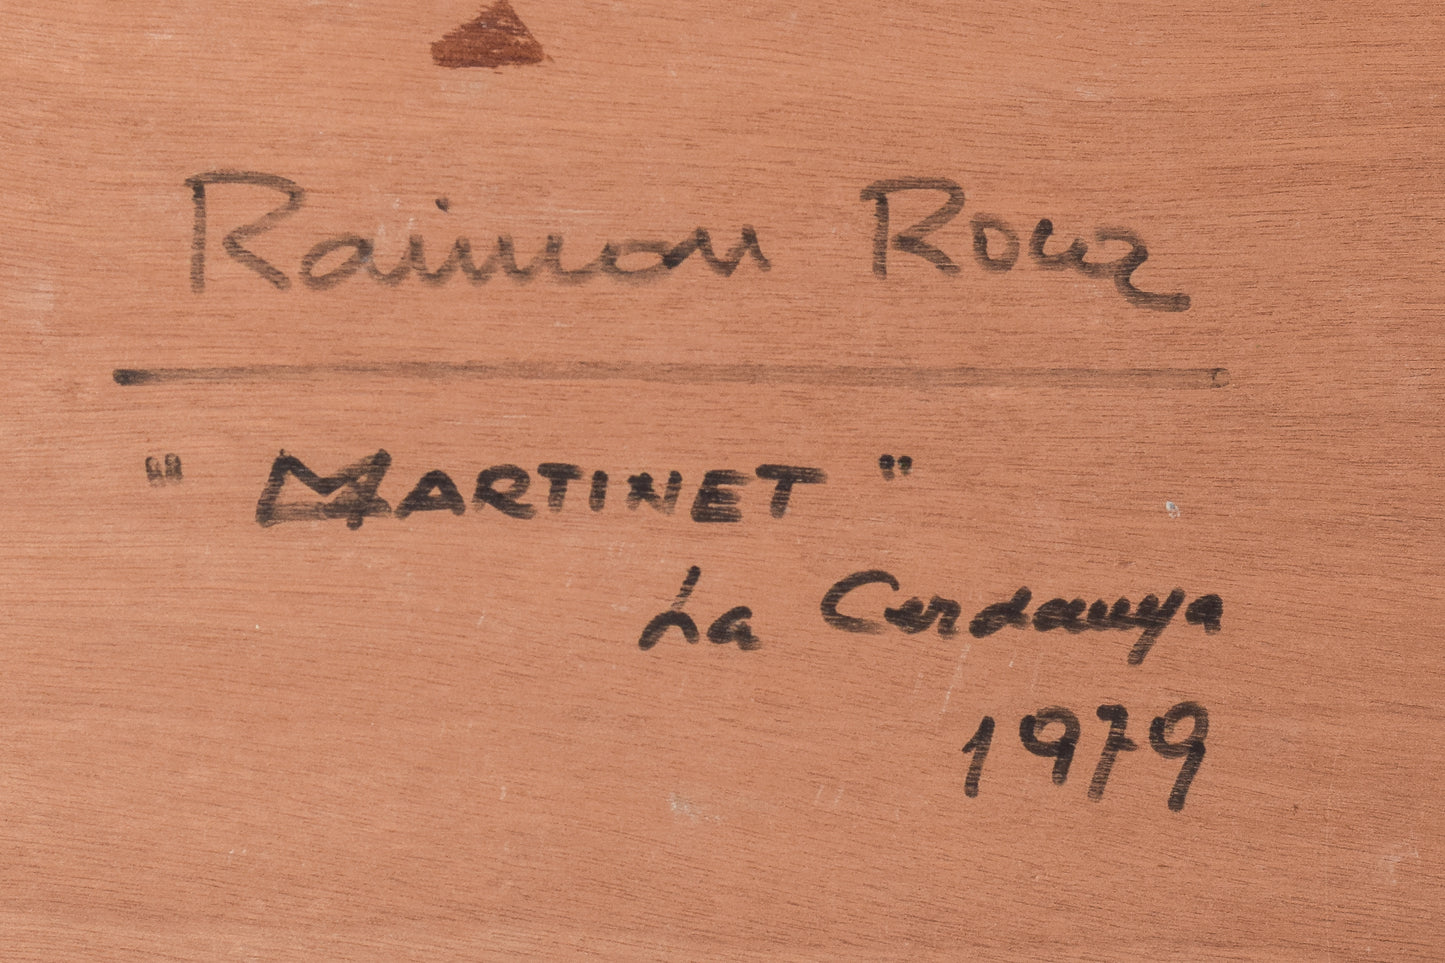 Raimon Roca Ricart (1917-2013) - Landscape "Martinet, La Cerdanya"